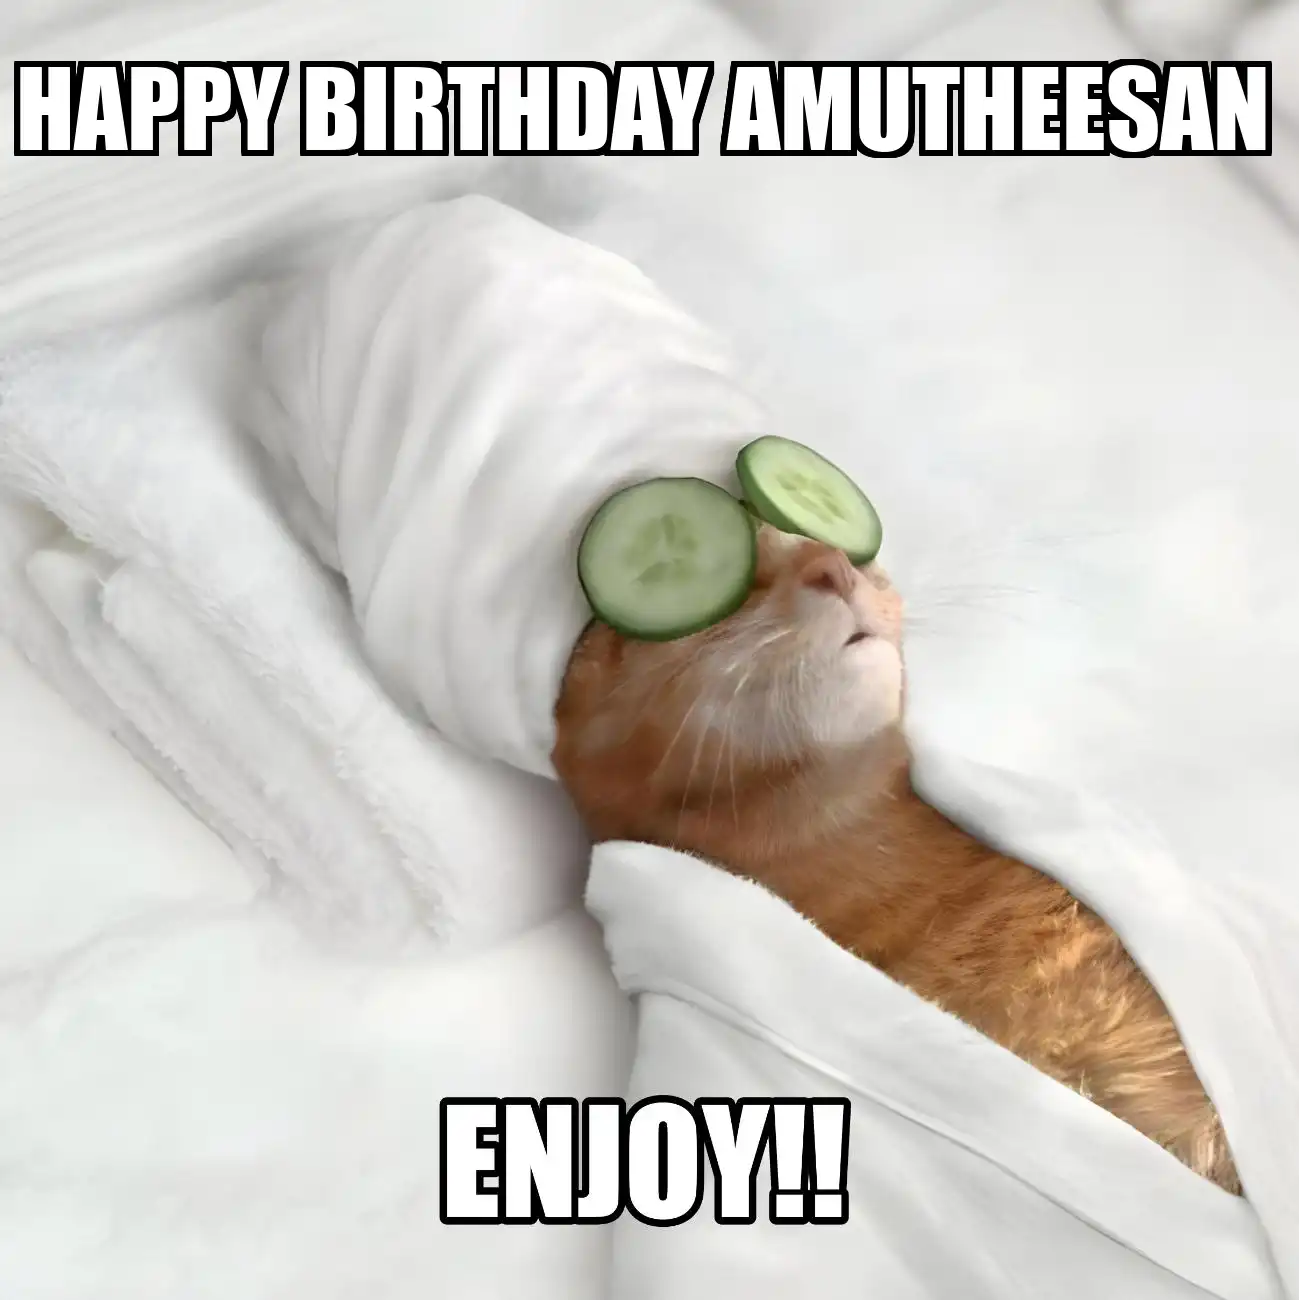 Happy Birthday Amutheesan Enjoy Cat Meme